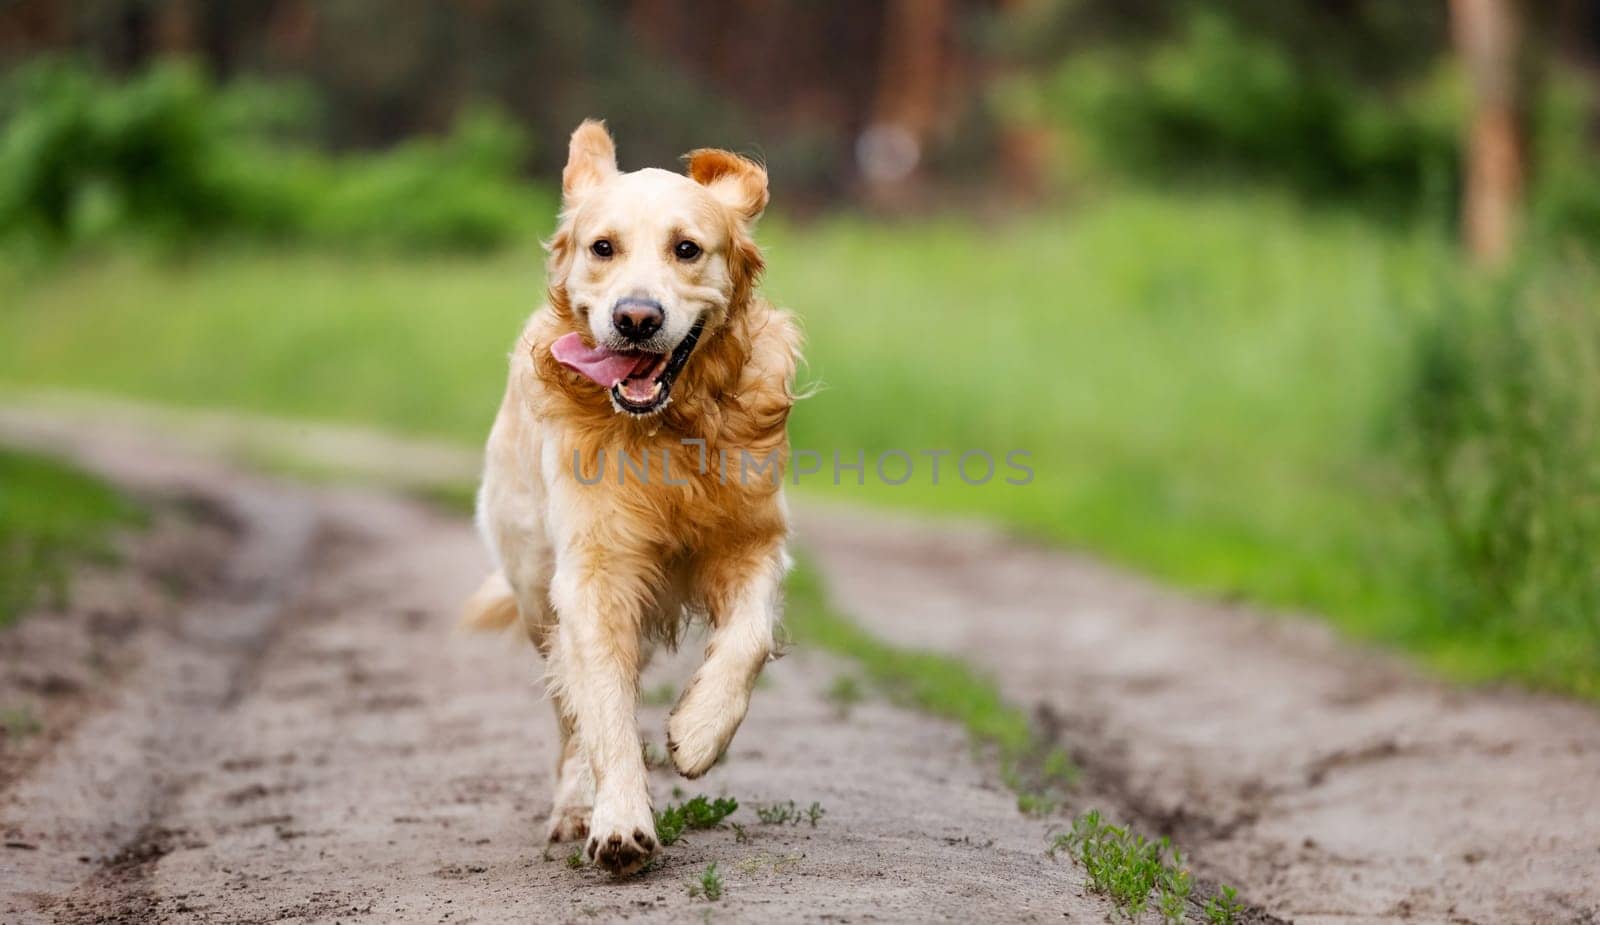 Golden retriever dog running by GekaSkr